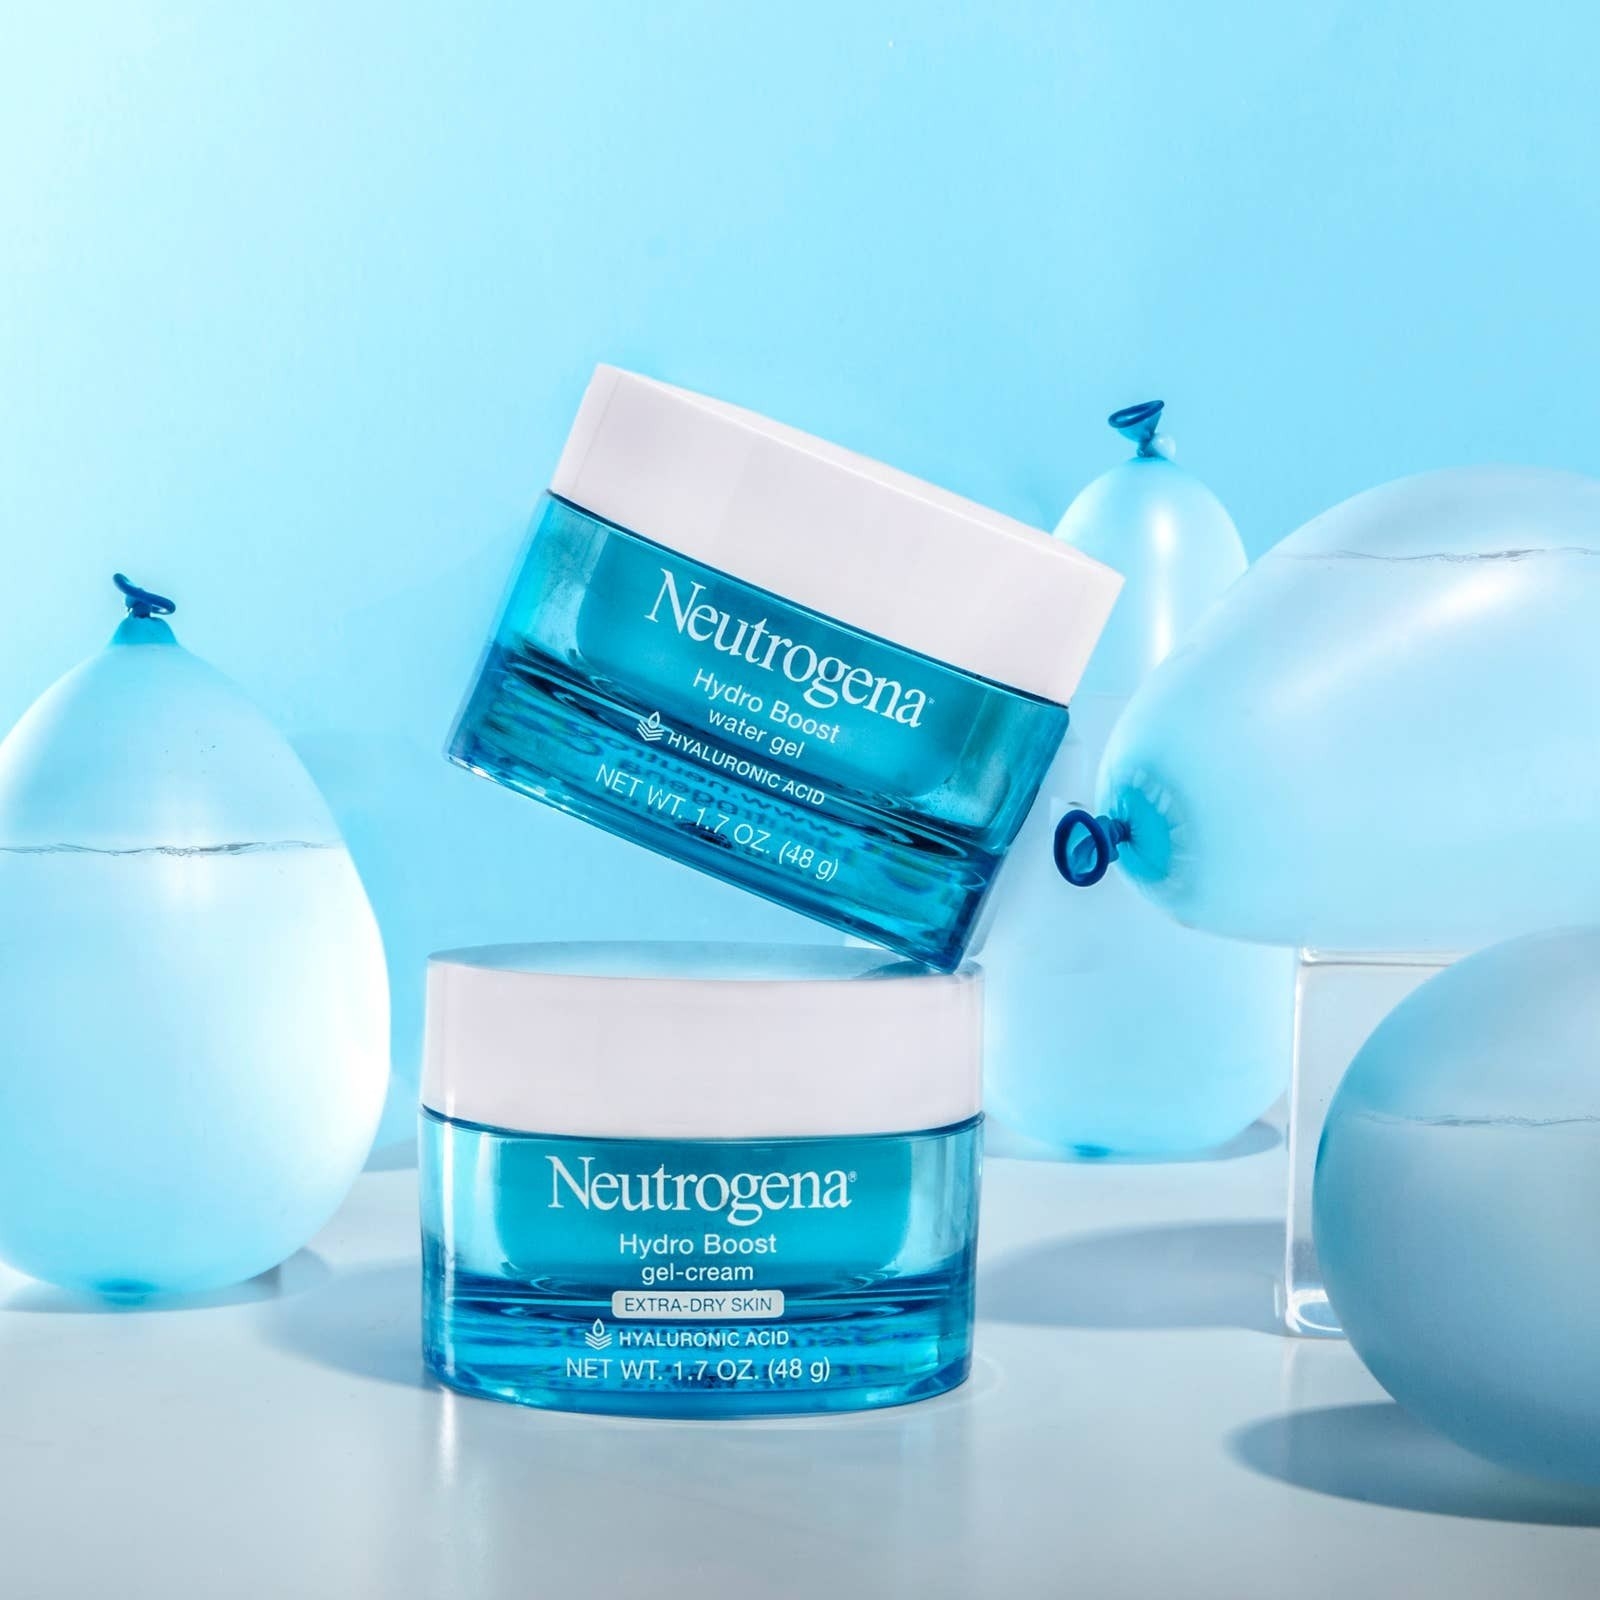 The Neutrogena Hydro Boost Water Gel moisturizer